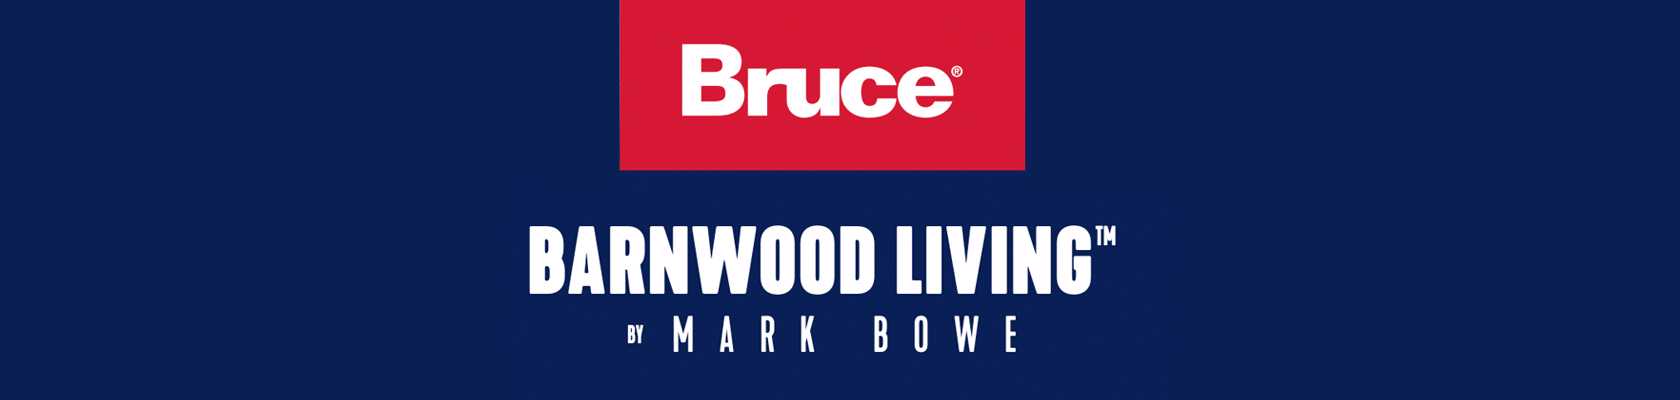 Bruce Barnwood Living by Mark Bowe